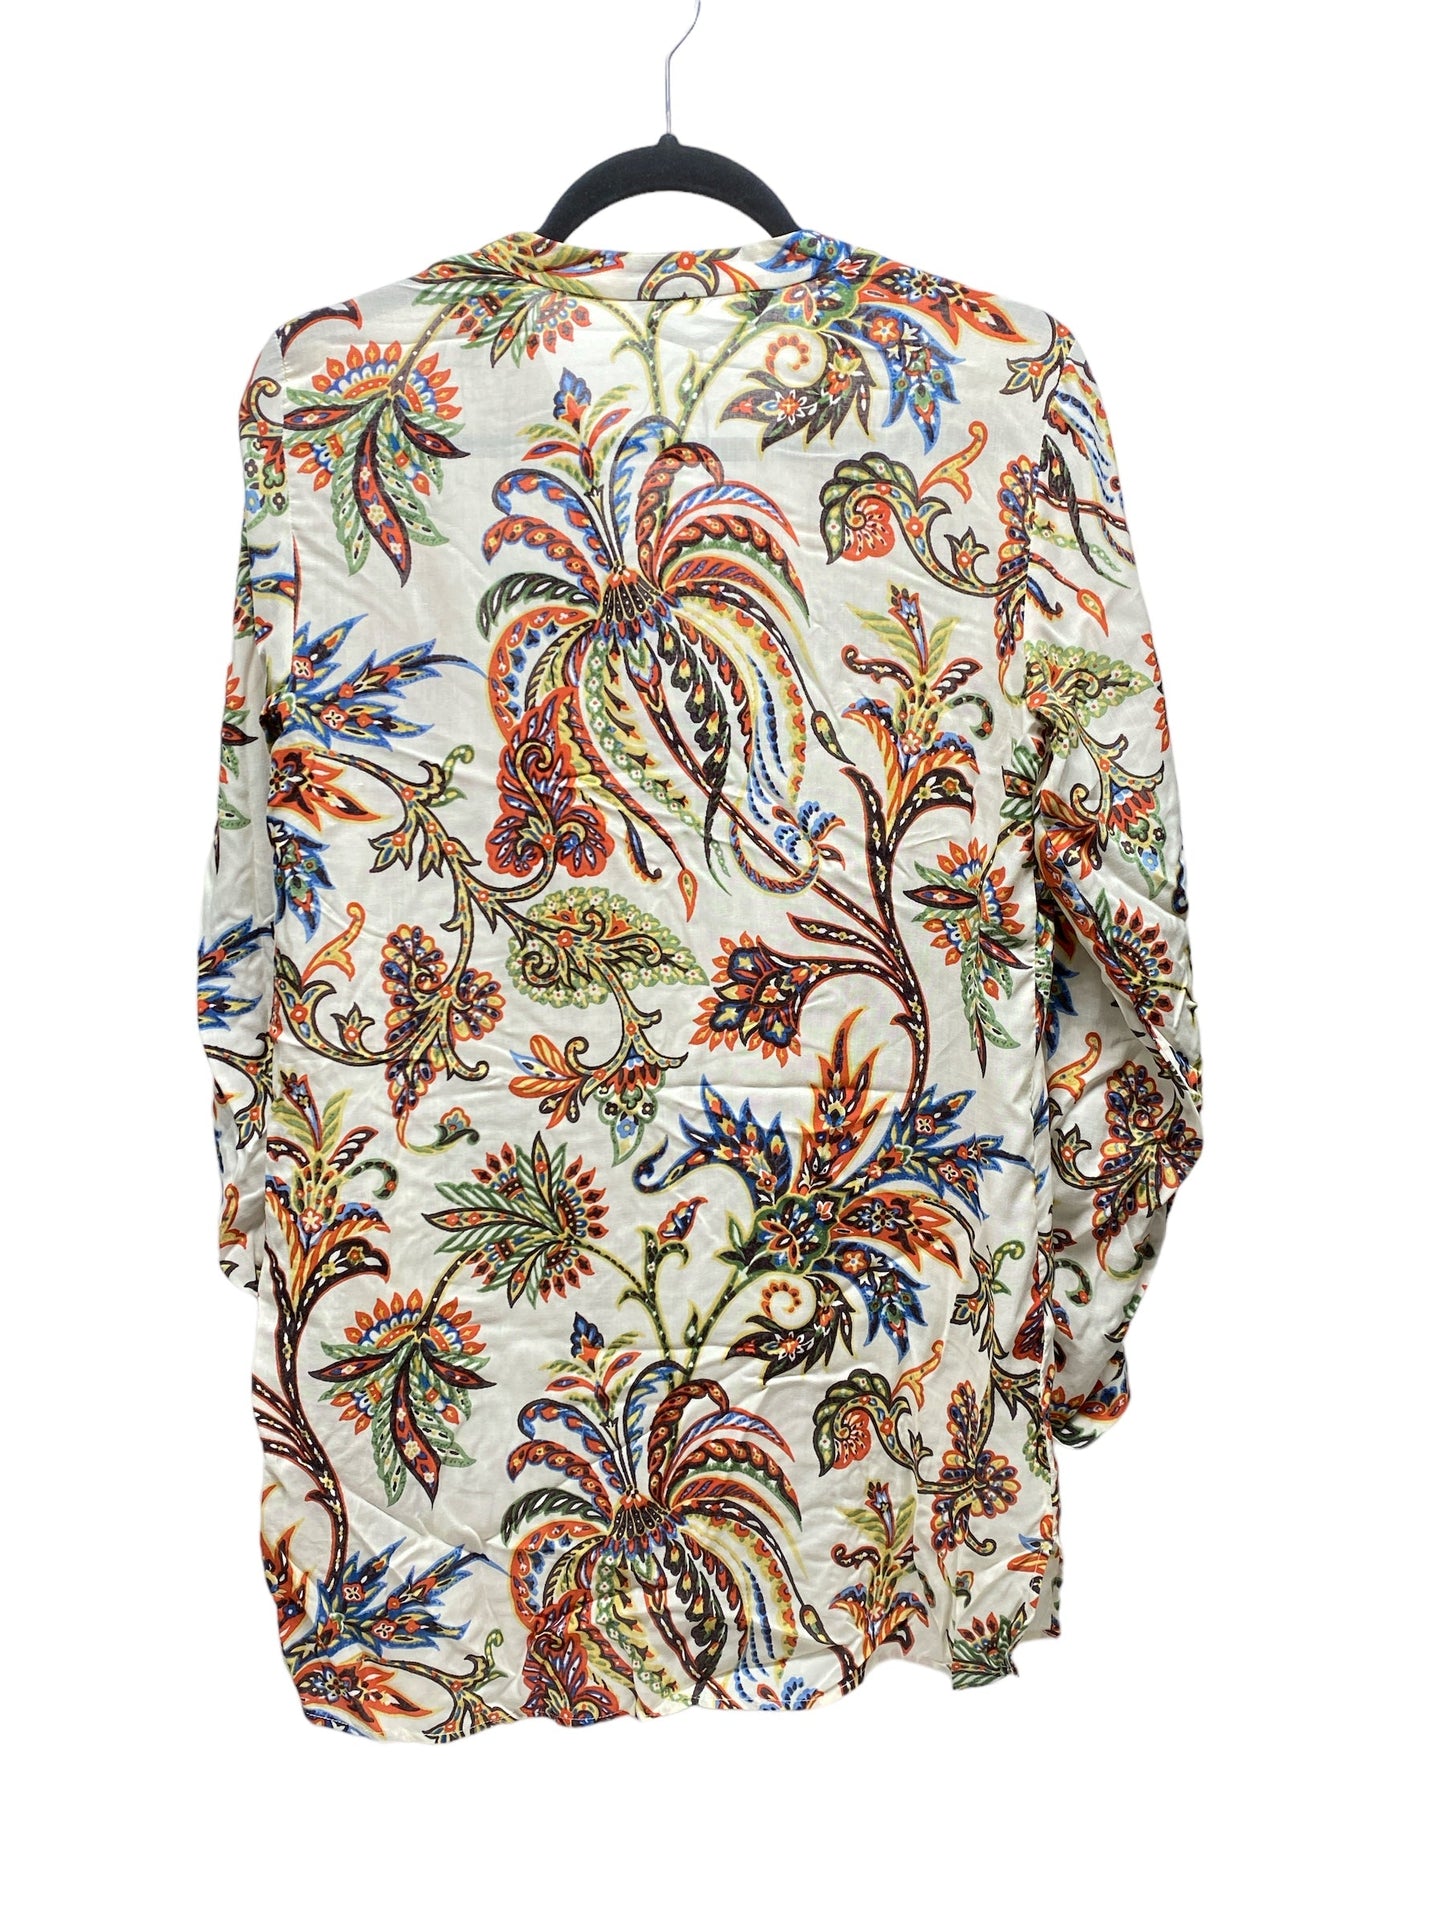 Paisley Print Top Long Sleeve Zara, Size M